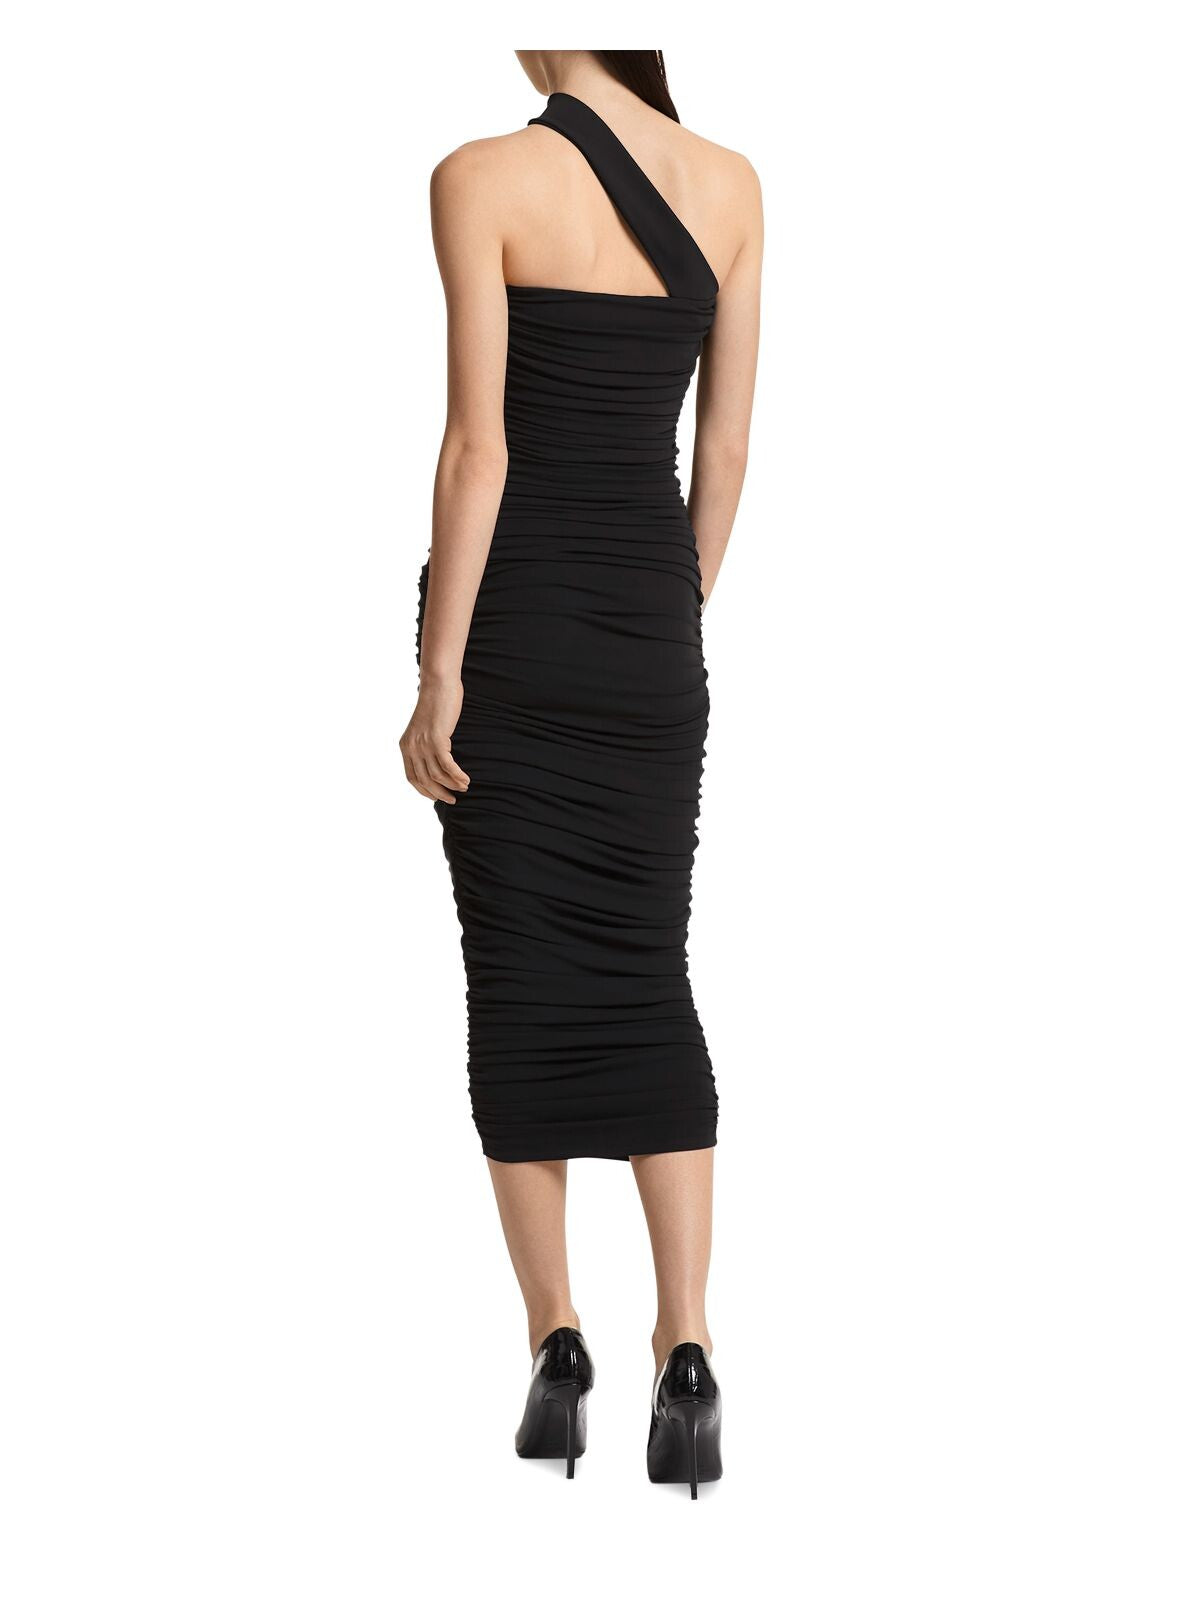 MICHAEL KORS Womens Black Stretch Ruched Pullover Sleeveless Asymmetrical Neckline Midi Cocktail Body Con Dress 8